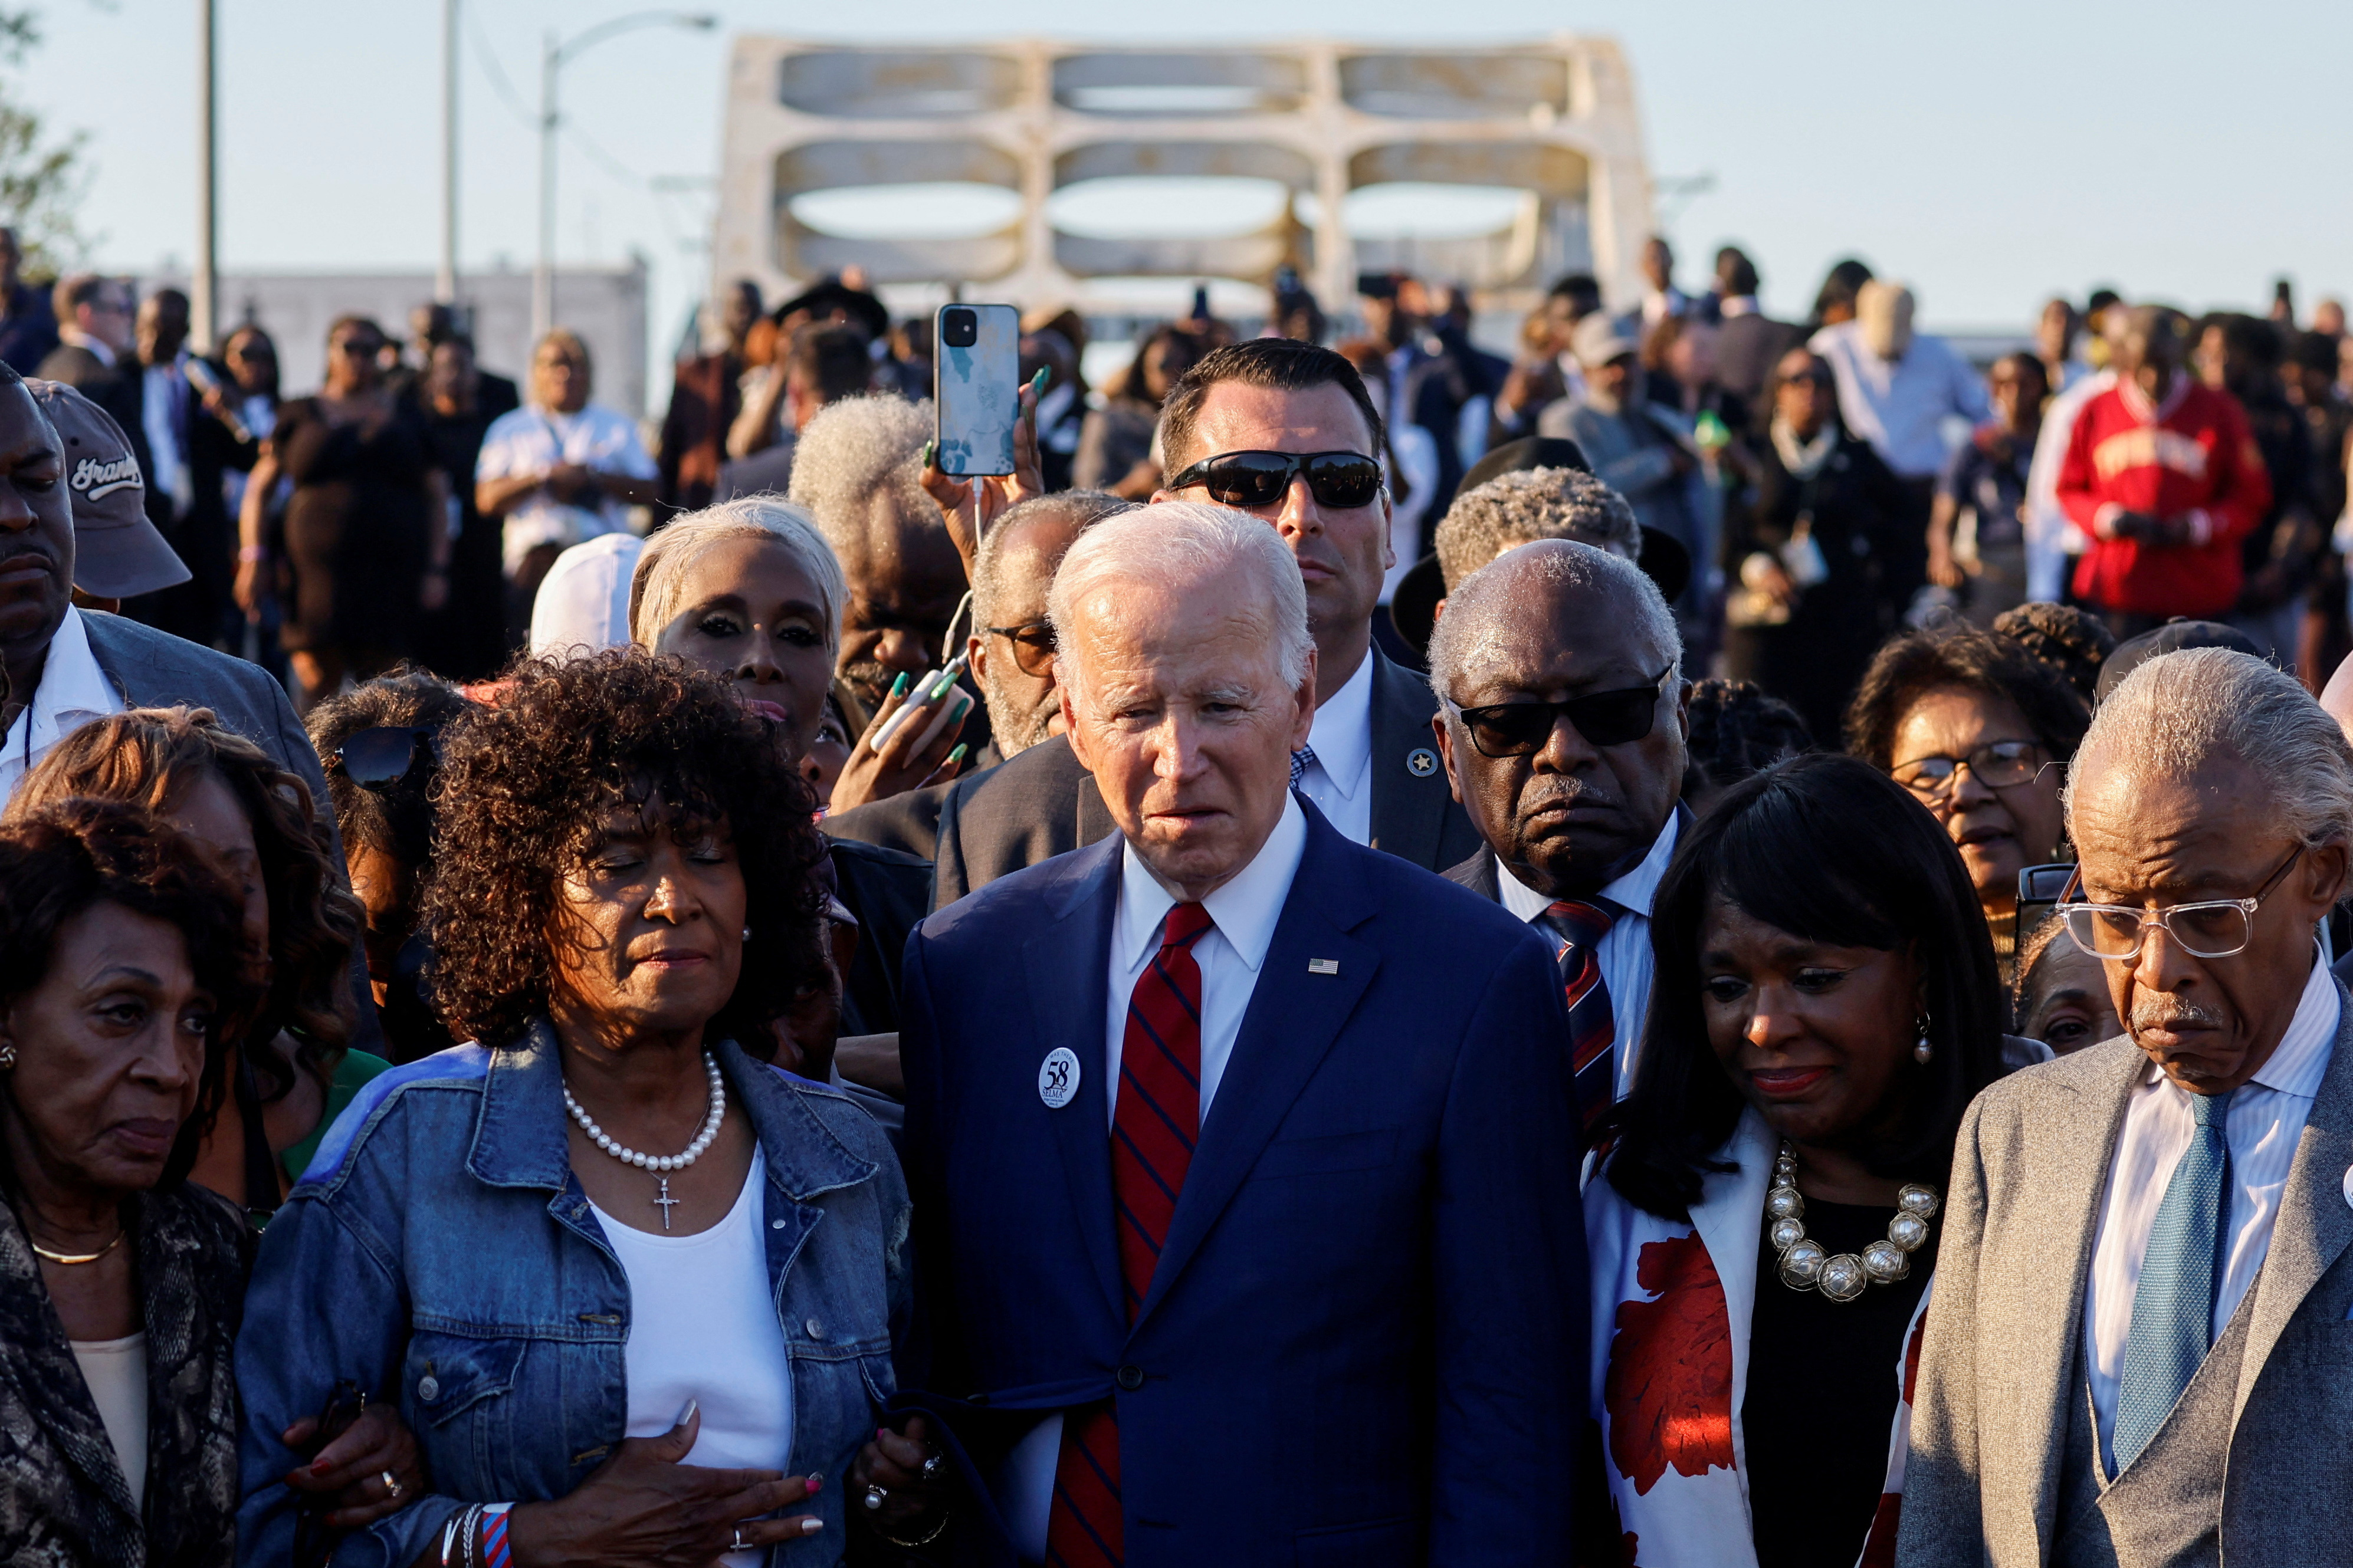 U.S. President Biden participates in a commemorative civil rights march across the Edmund Pettus Bridge in Selma, Alabama